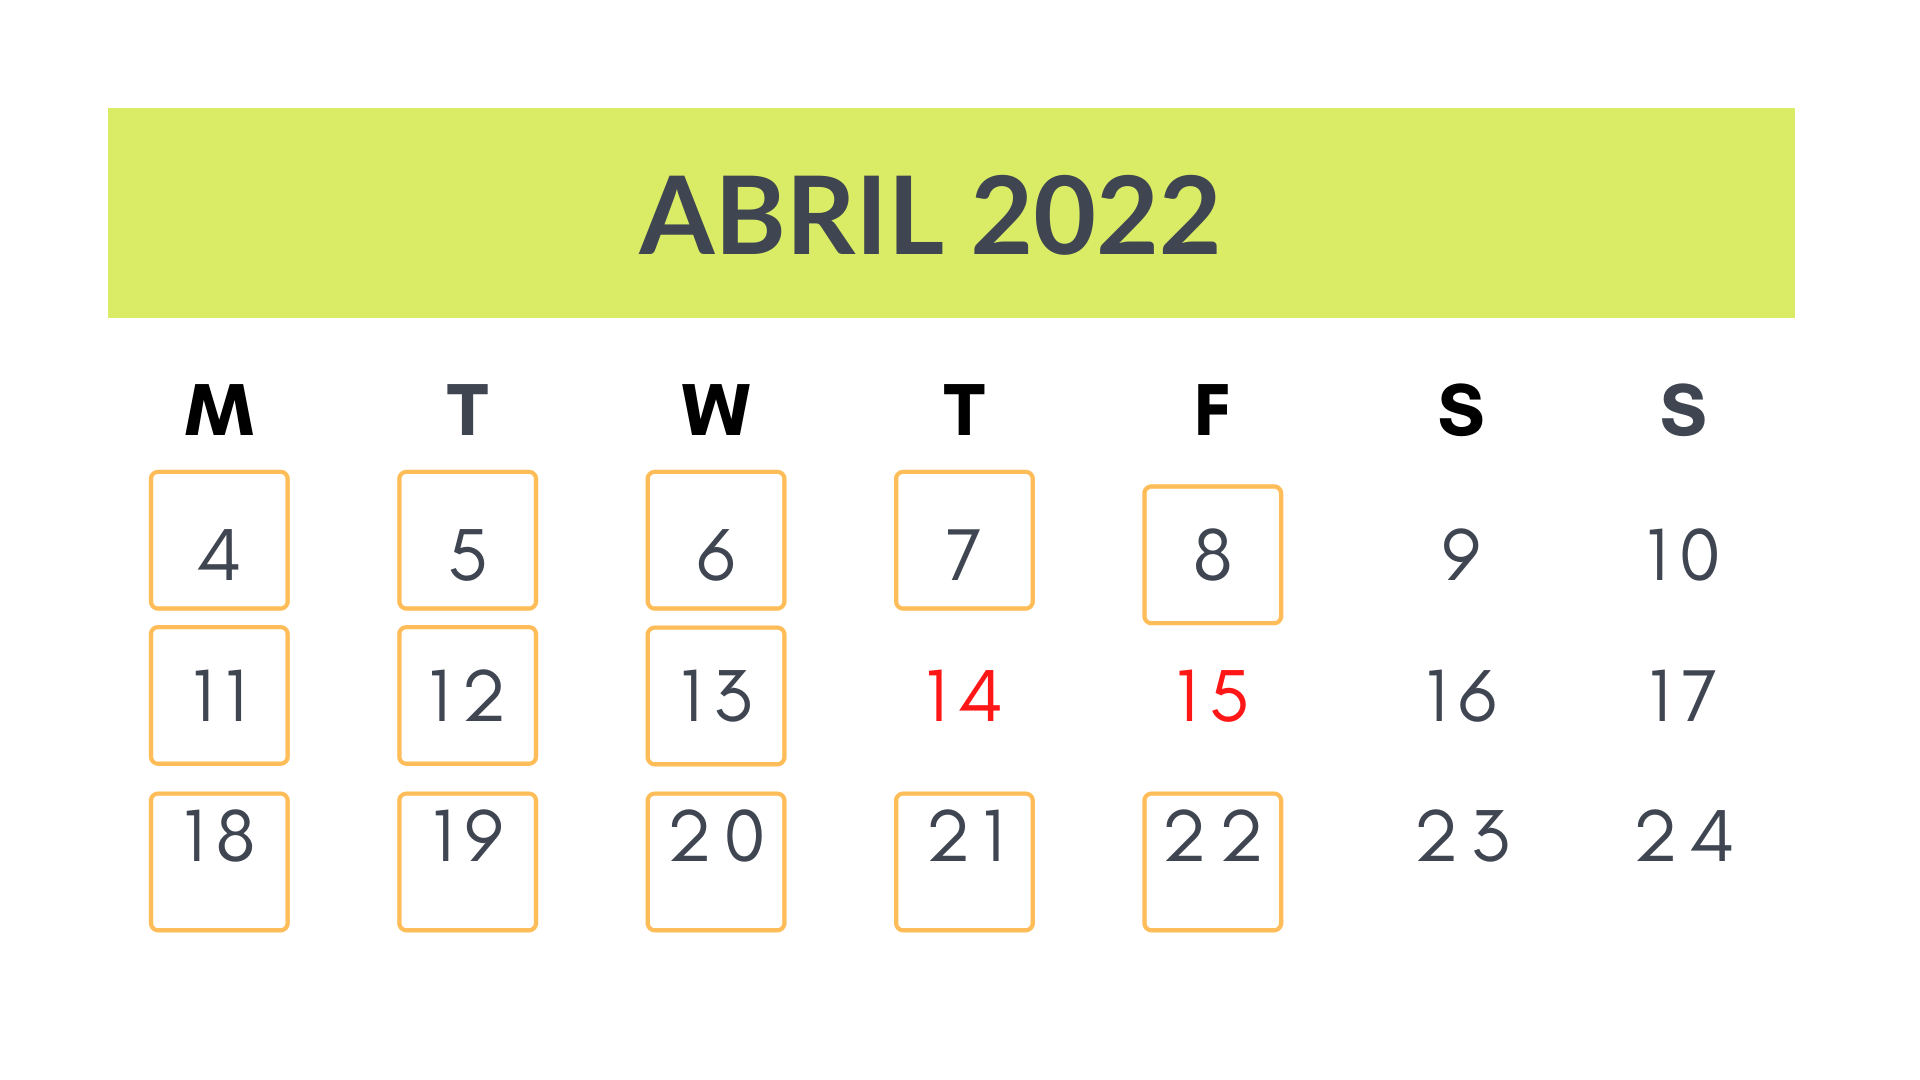 Easter Calendar 2022 for Flyers and Website final